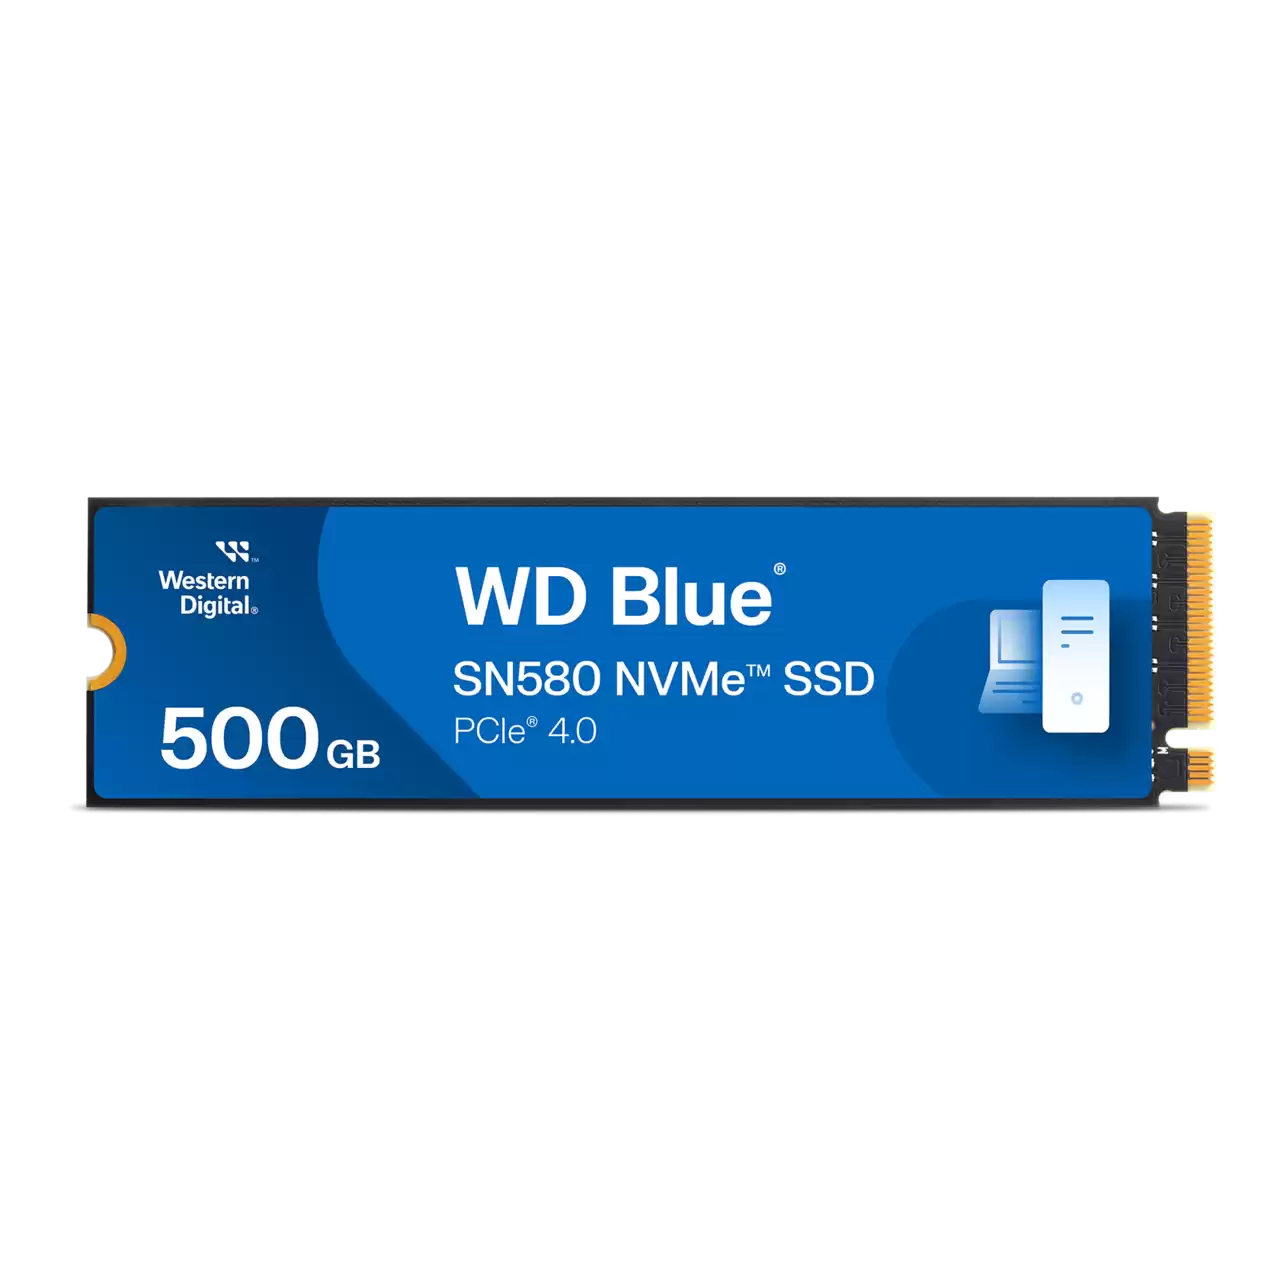 WD Blue™ SN580 500GB PCIe Gen 4 NVMe M.2 SSD